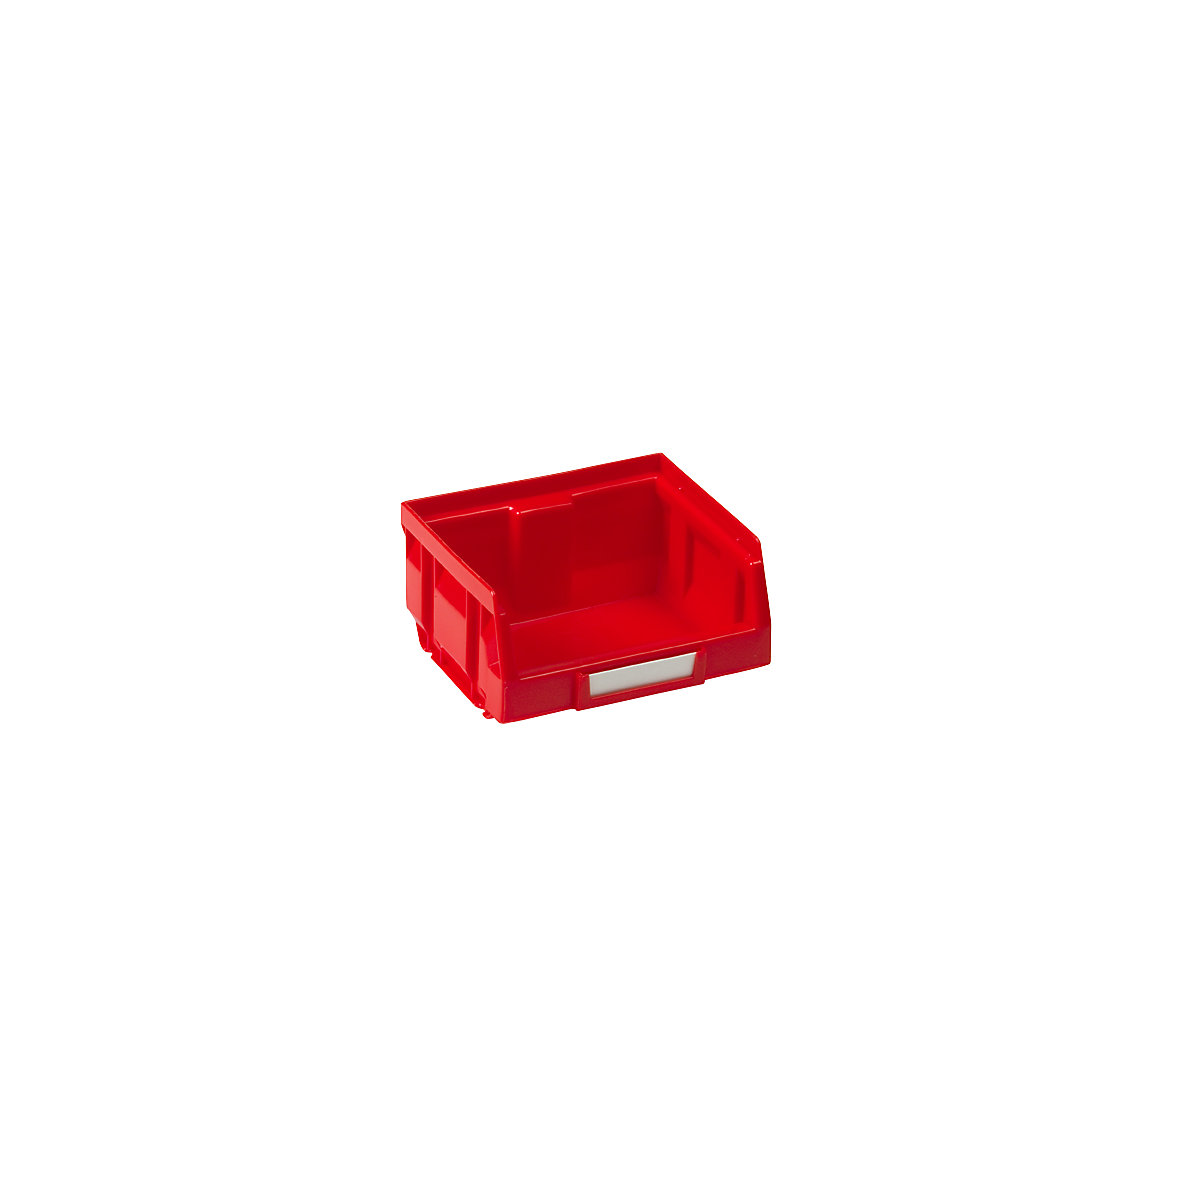 Magazijnbak van polyethyleen, l x b x h = 88 x 105 x 54 mm, rood, VE = 50 stuks-6